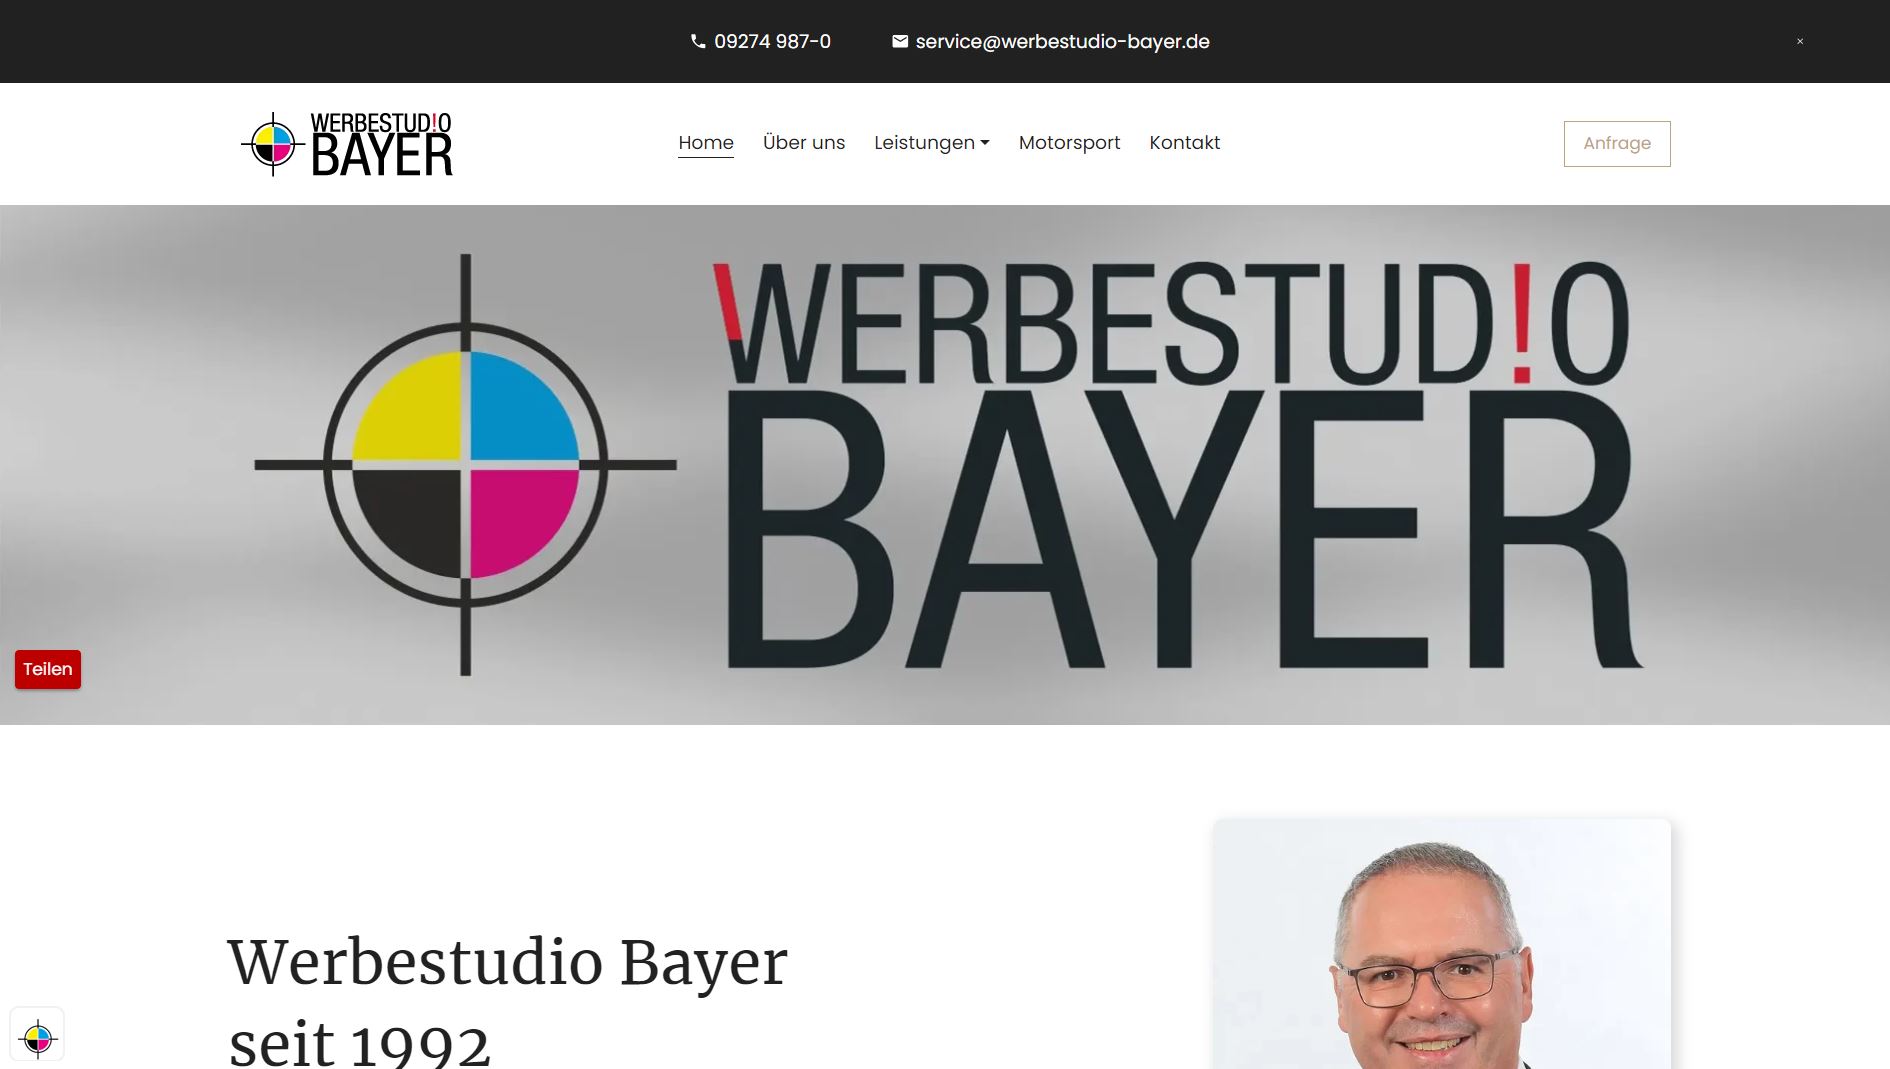 Werbestudio Bayer